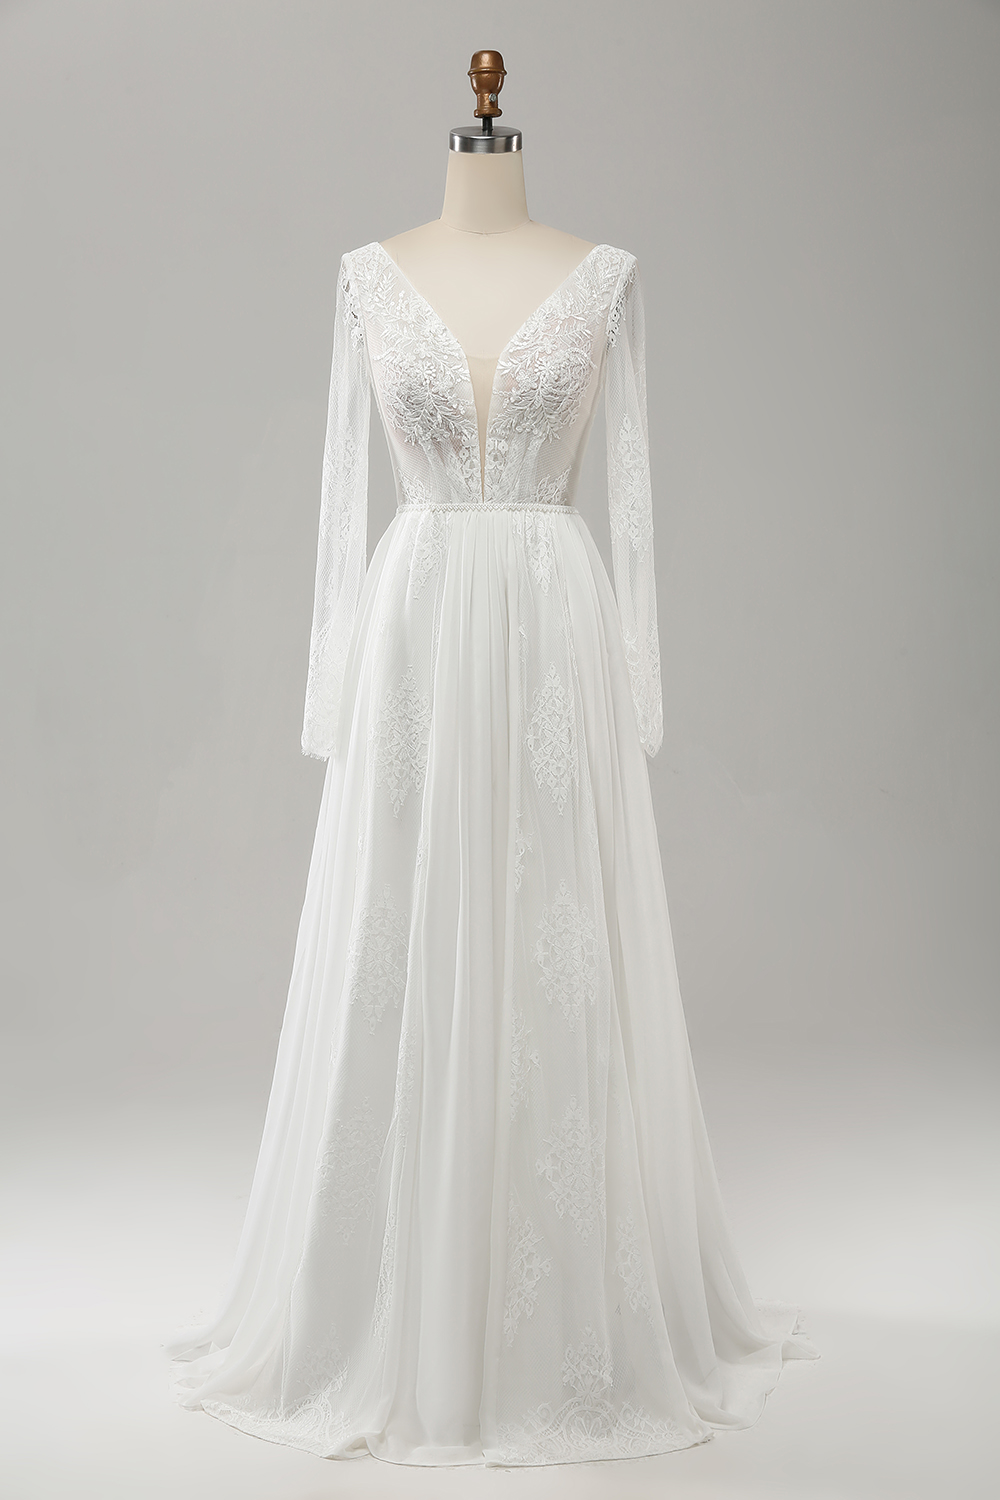 Leely Women White Long Wedding Dress A Line Boho Bridal Dress with Lace